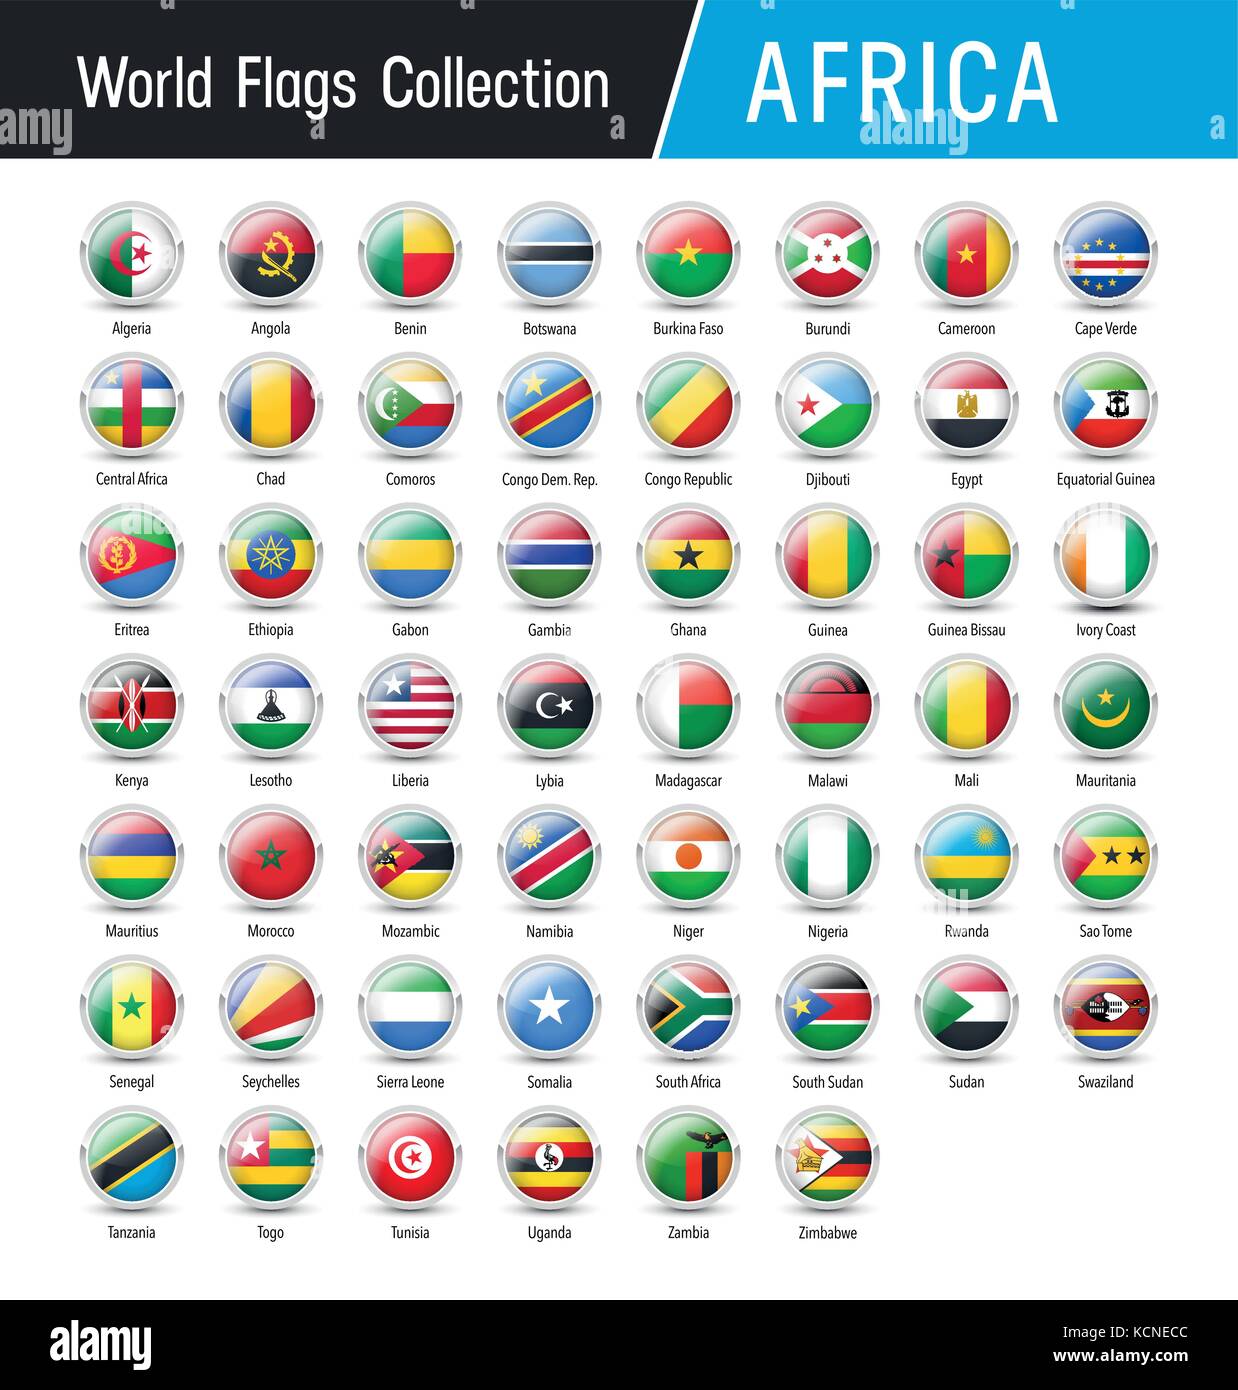 Flaggen Afrika, runde Symbole - Vektor Welt Fahnen Sammlung Stock Vektor